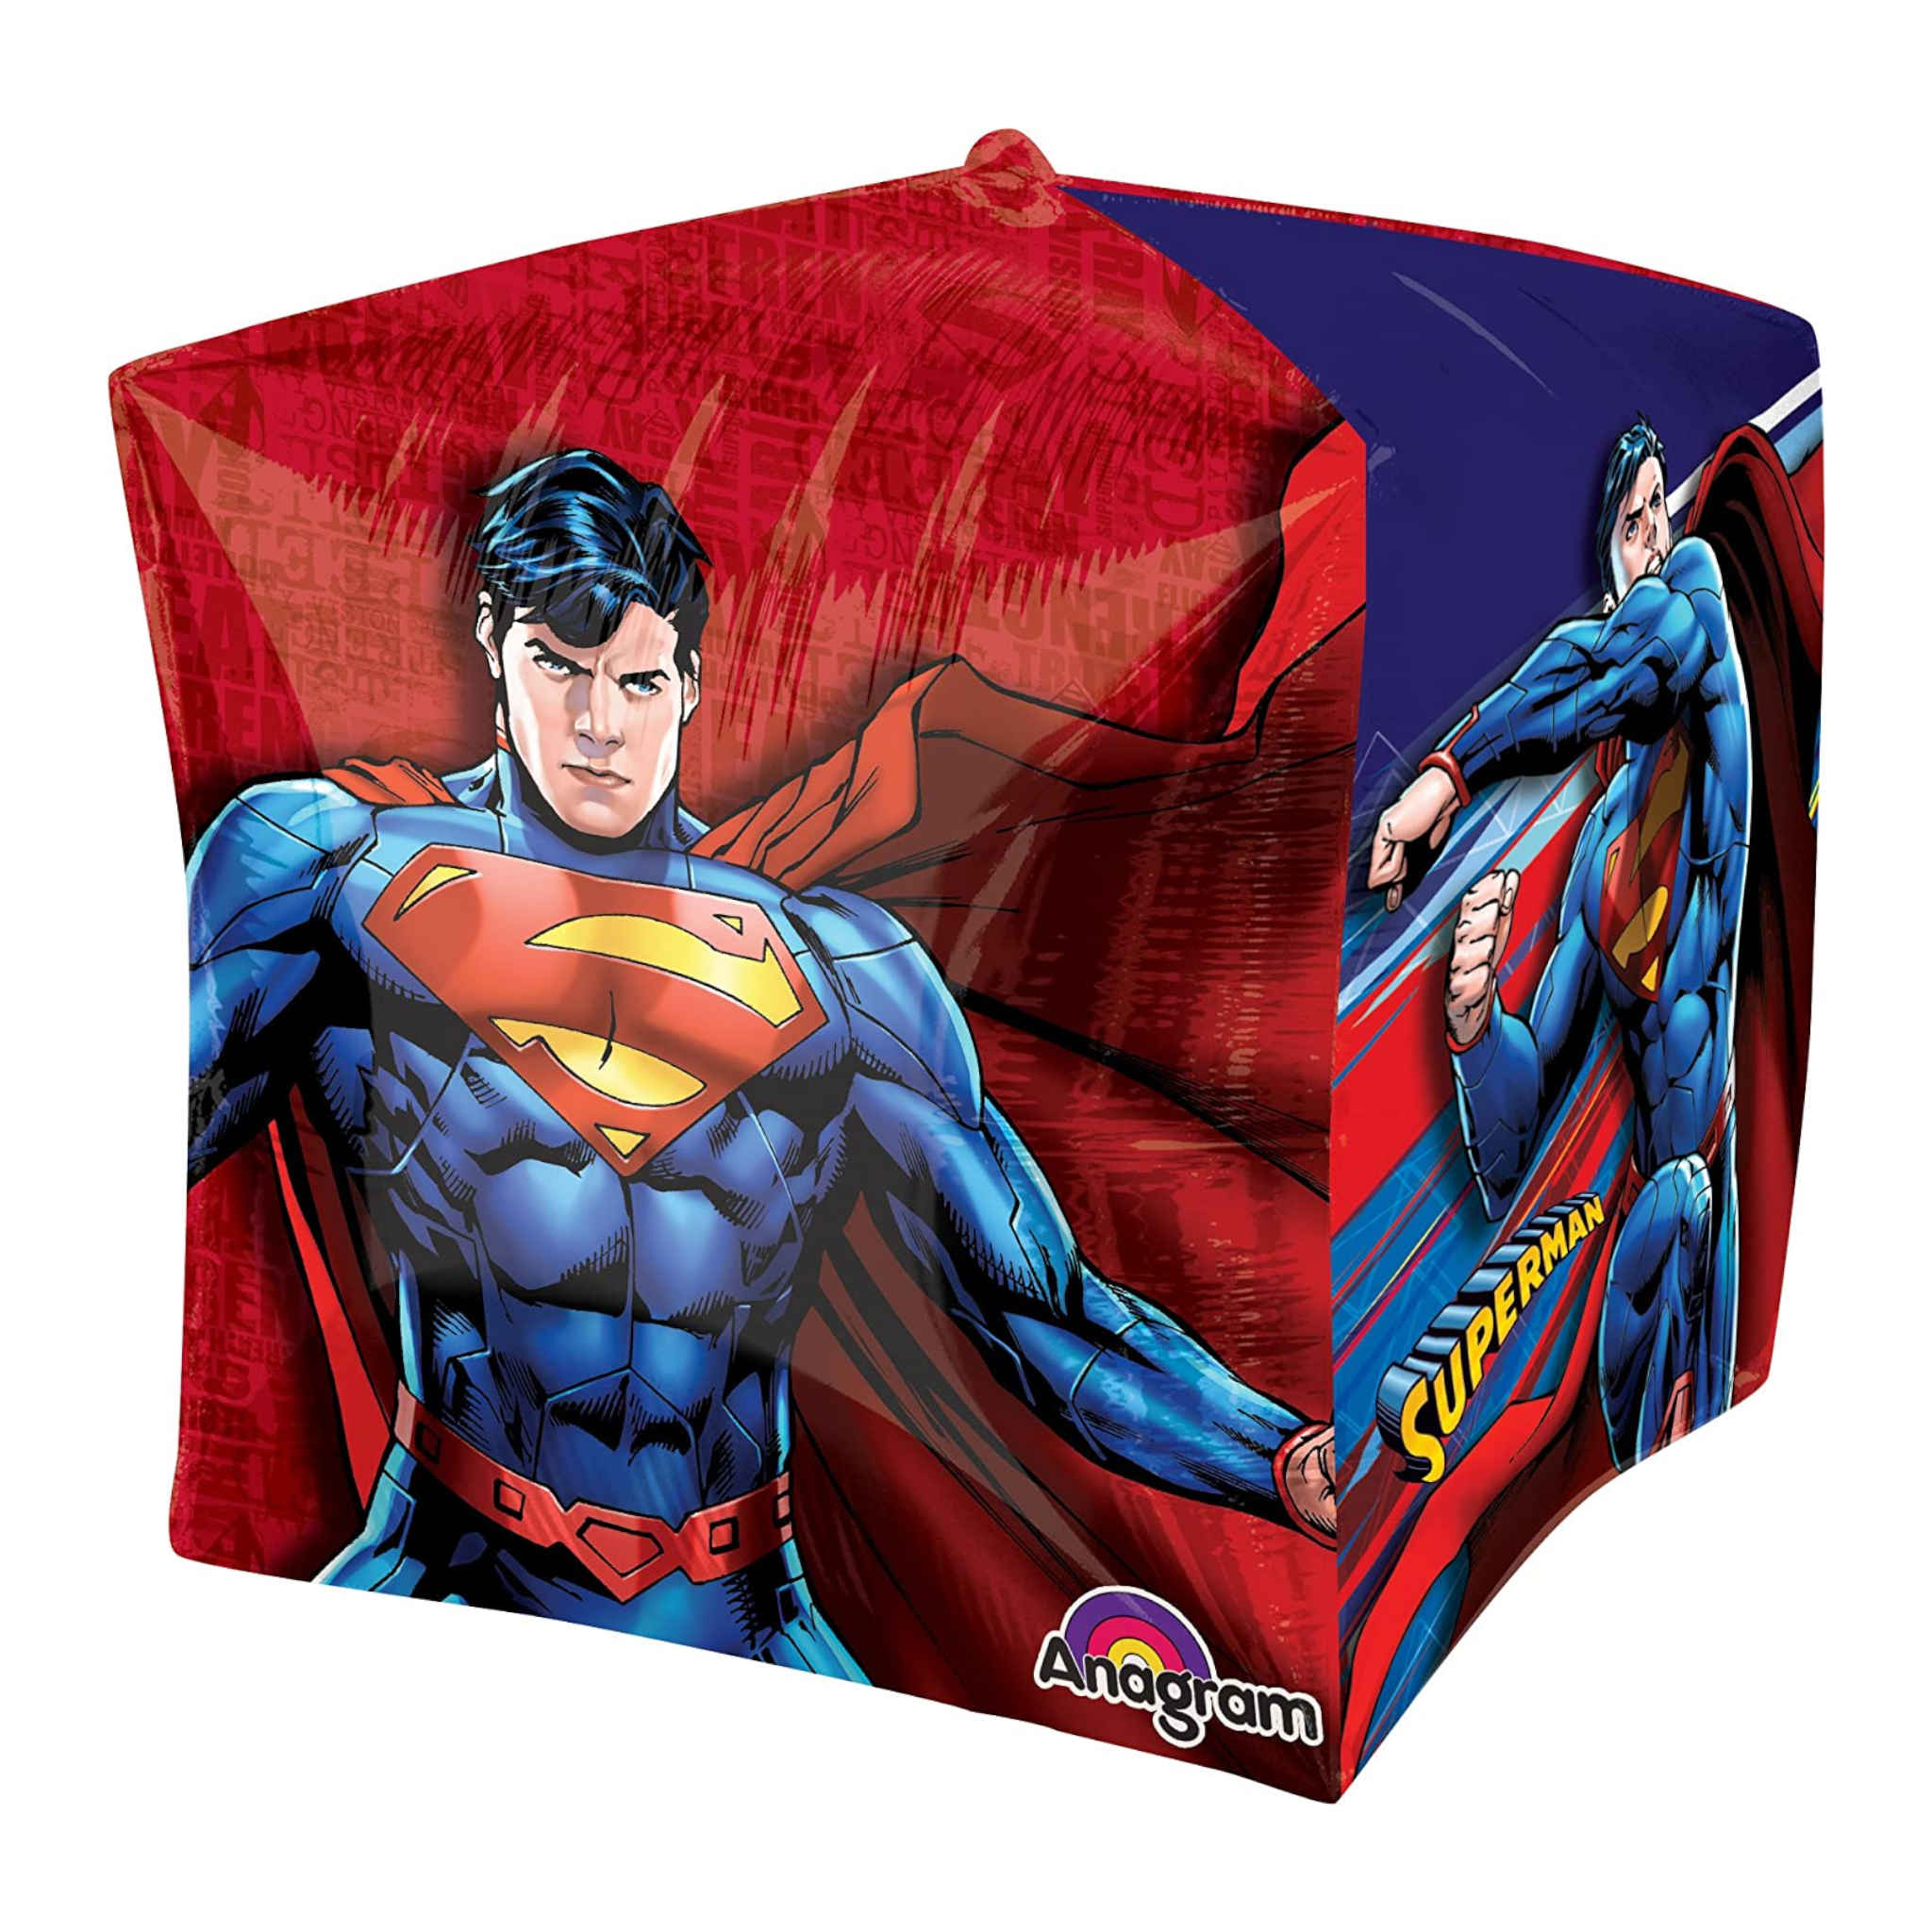 Superman Ultrashape Cubez Balloon | 15 x 15 inch